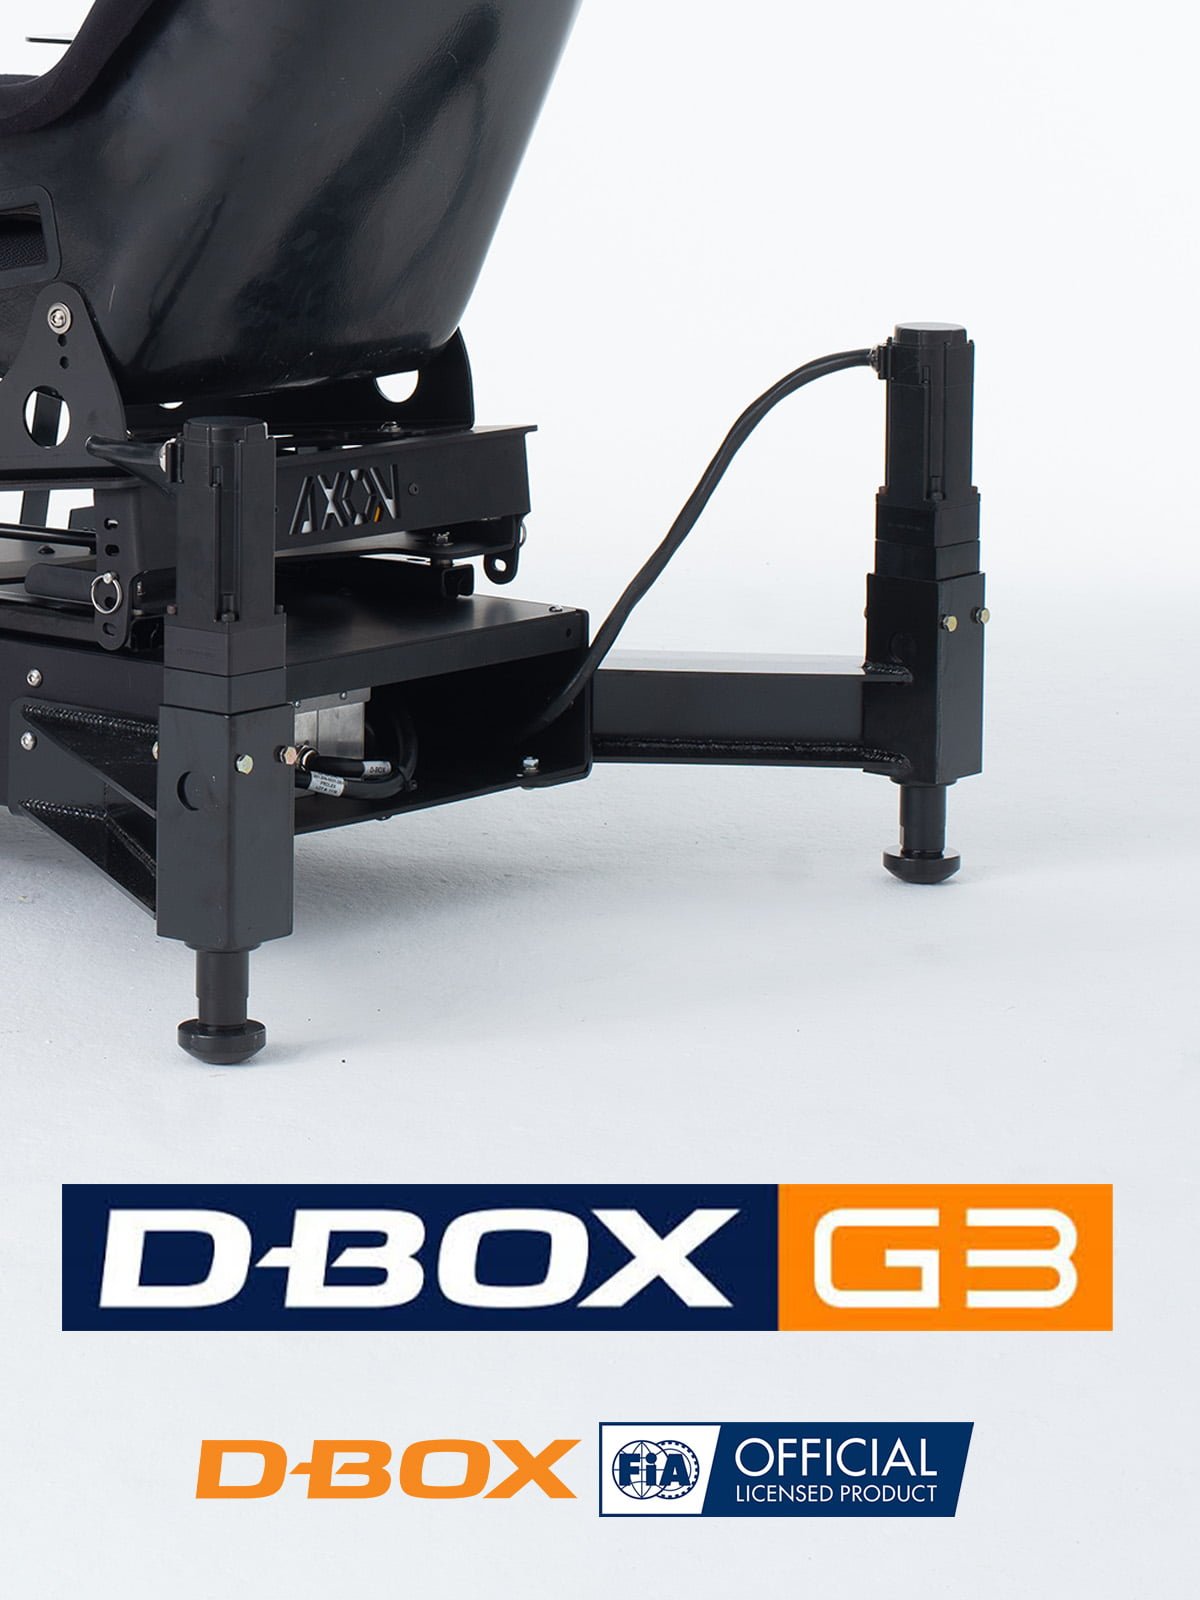 DSG BoxBox on X: Time to give sneaky a run for his money @Predator_USA  #PredatorPAX #ad  / X